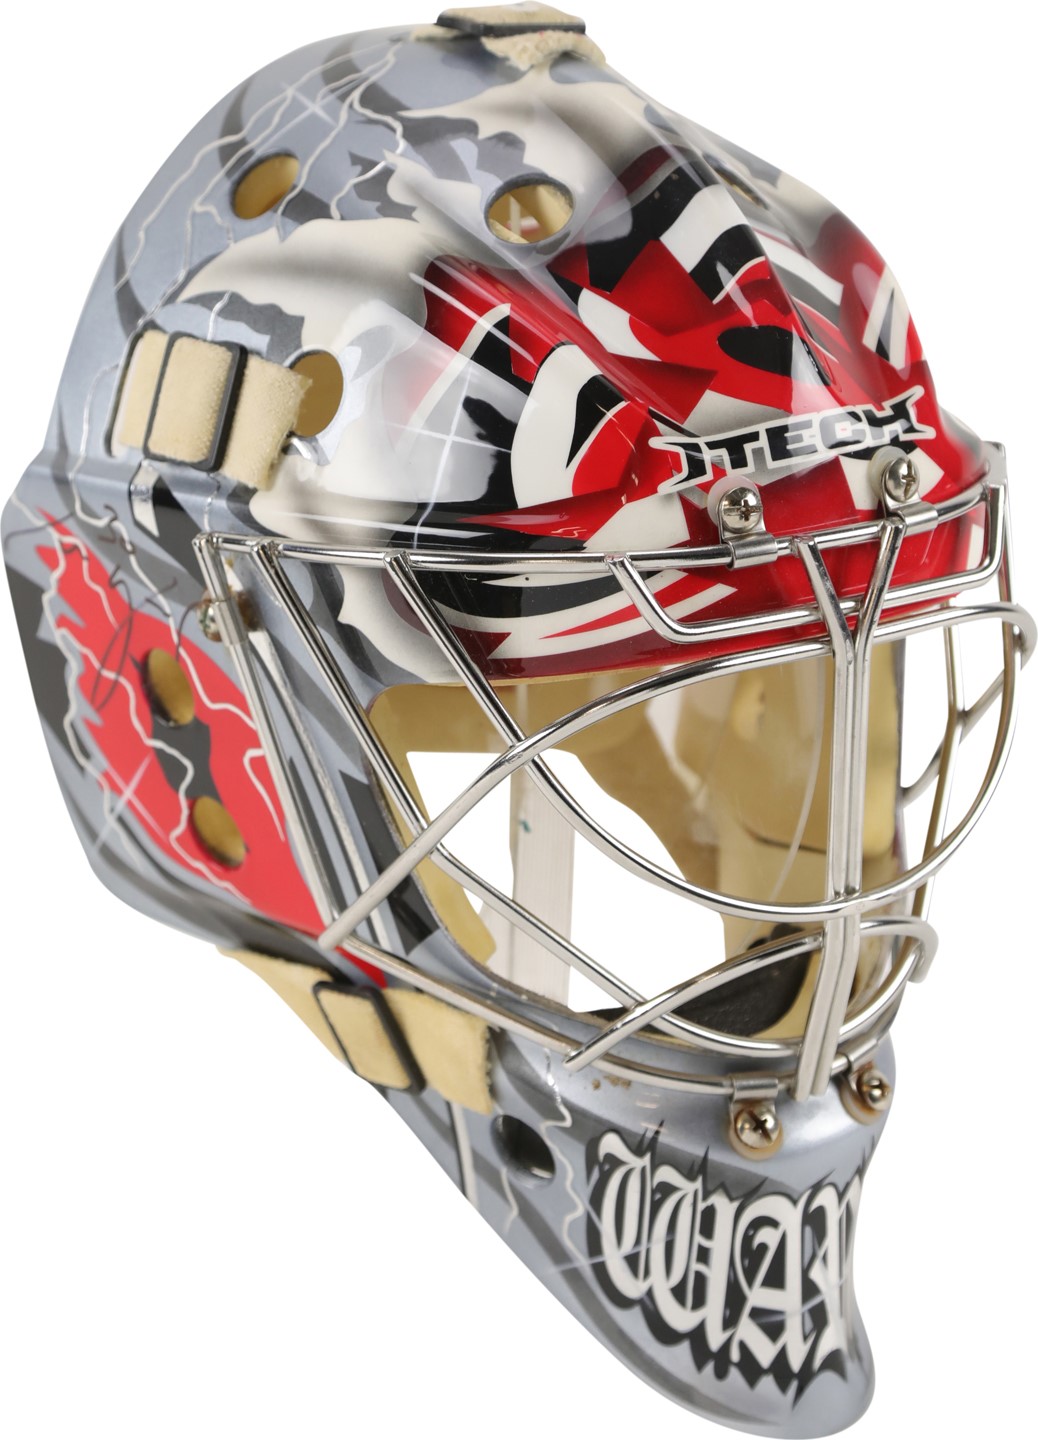 Hockey - Cam Ward Carolina Hurricanes Game Worn Goalie's Mask